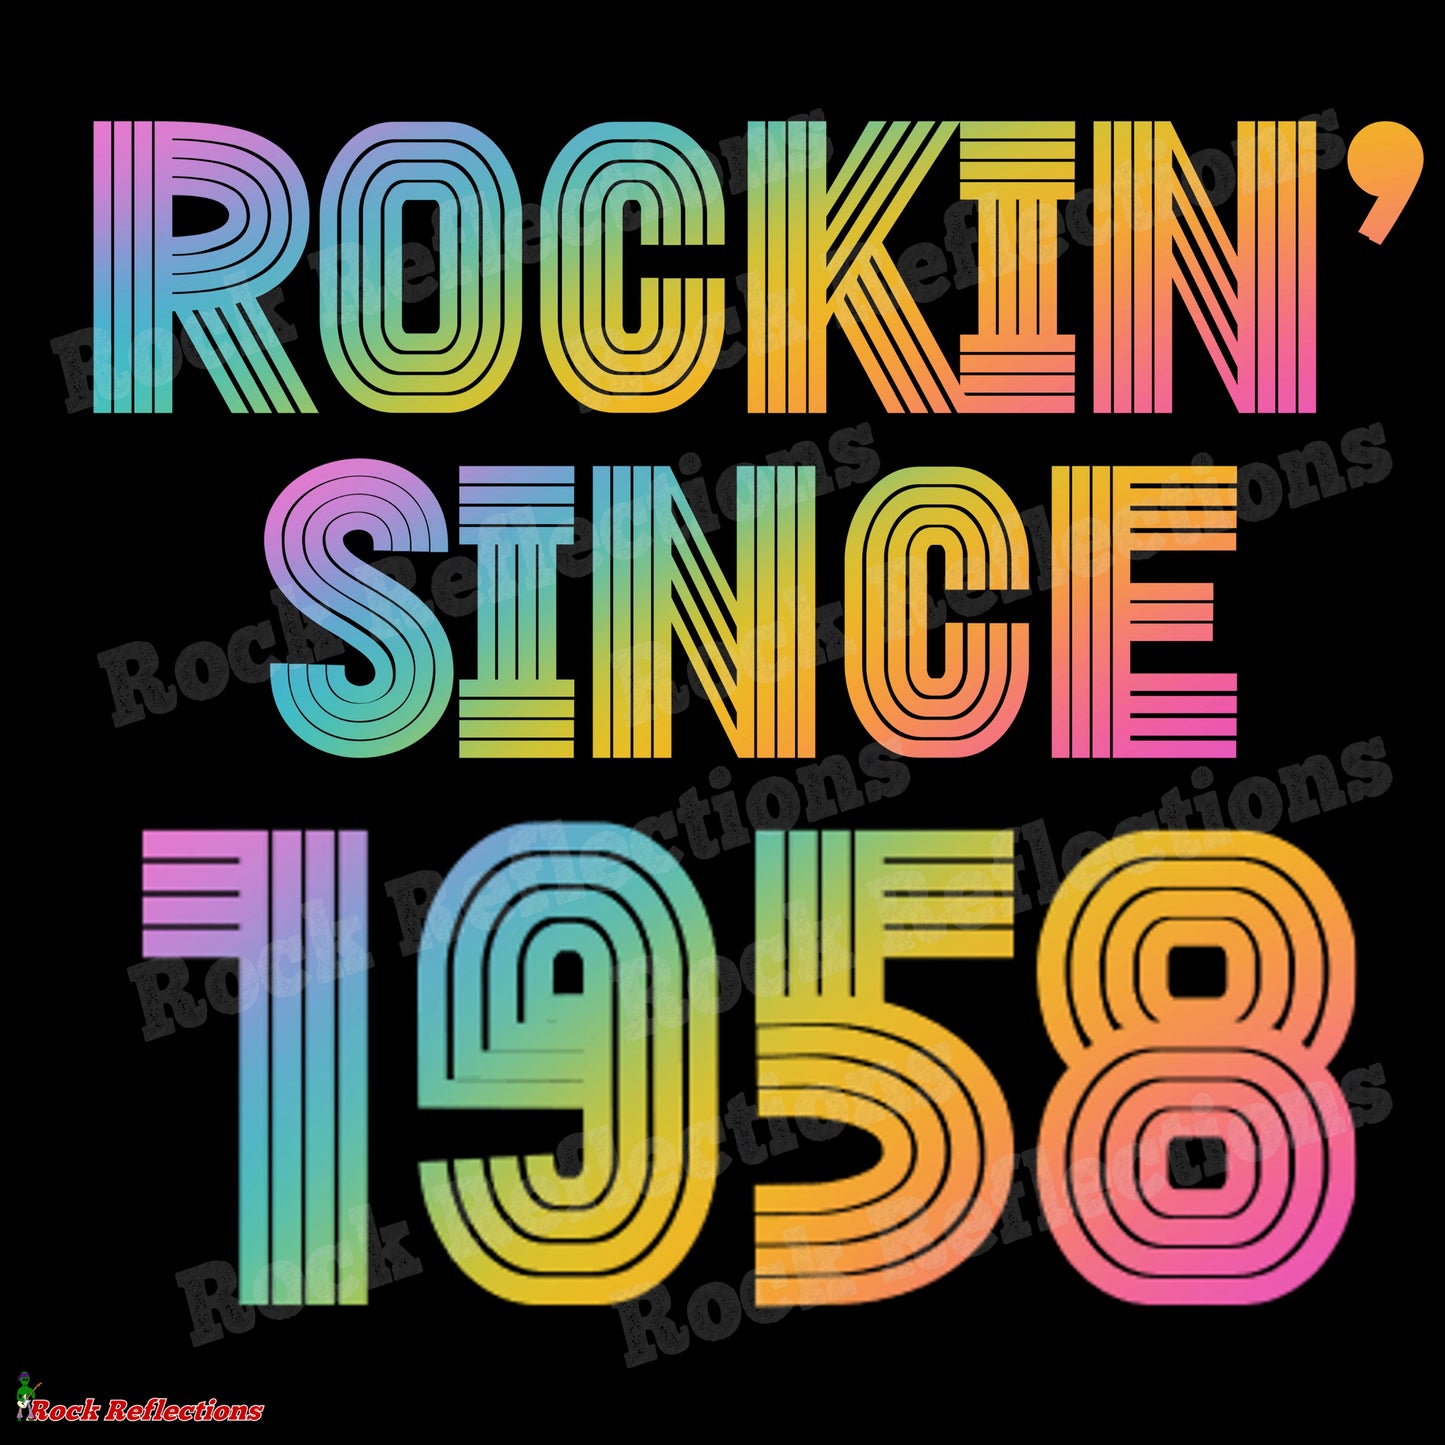 Rockin' Since: Personalized T-Shirt Gelato